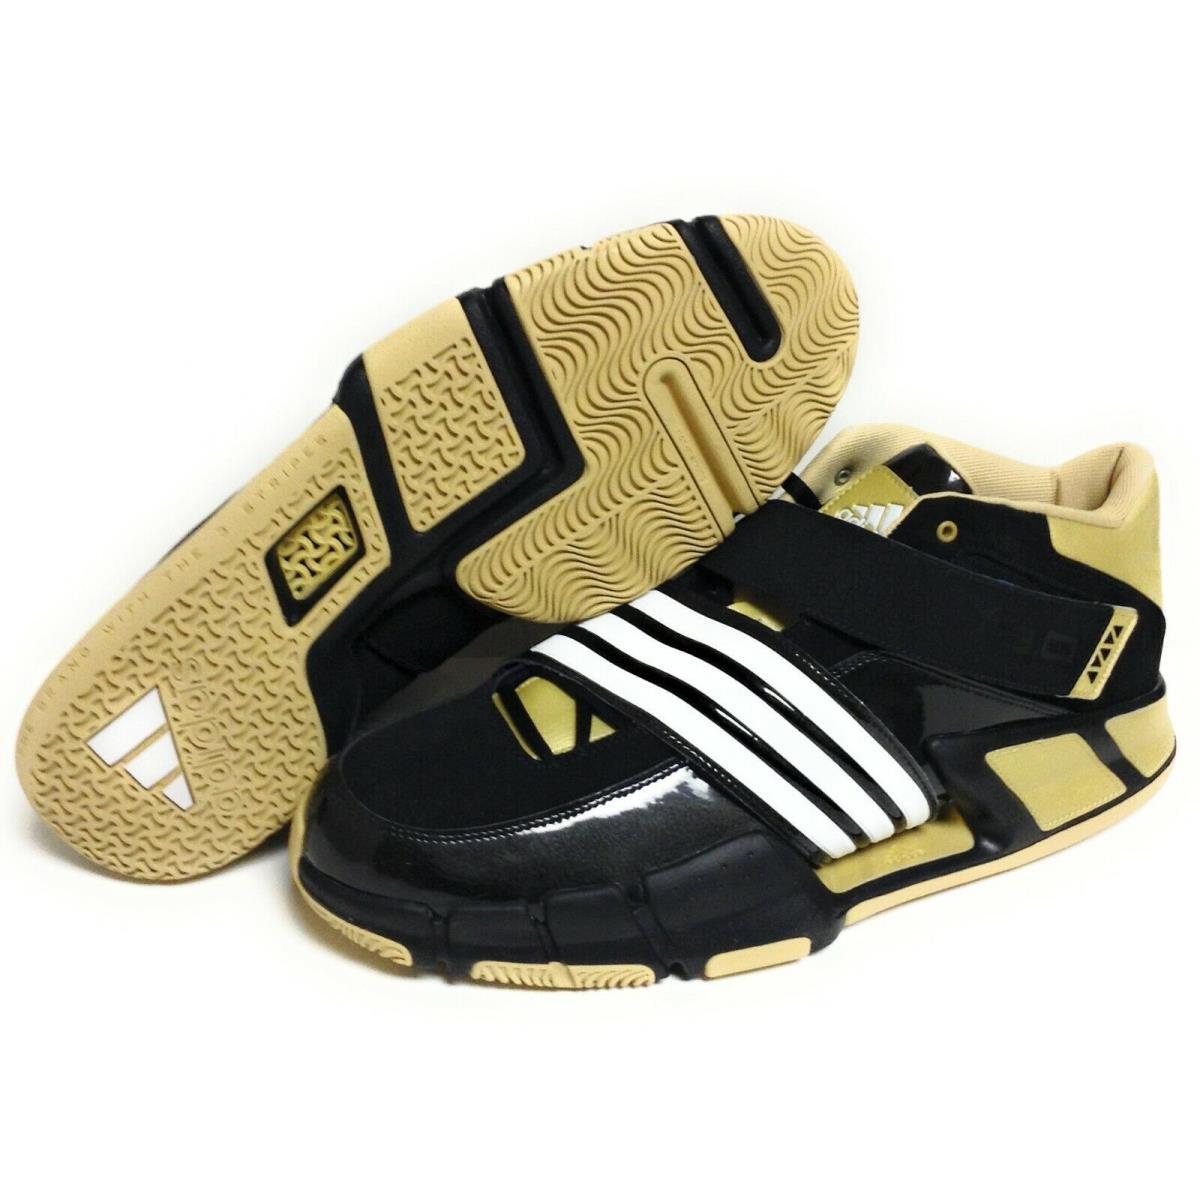 Mens Adidas Pilrahna Iii 170752 Black Sandstorm 2006 Basketball Sneakers Shoes